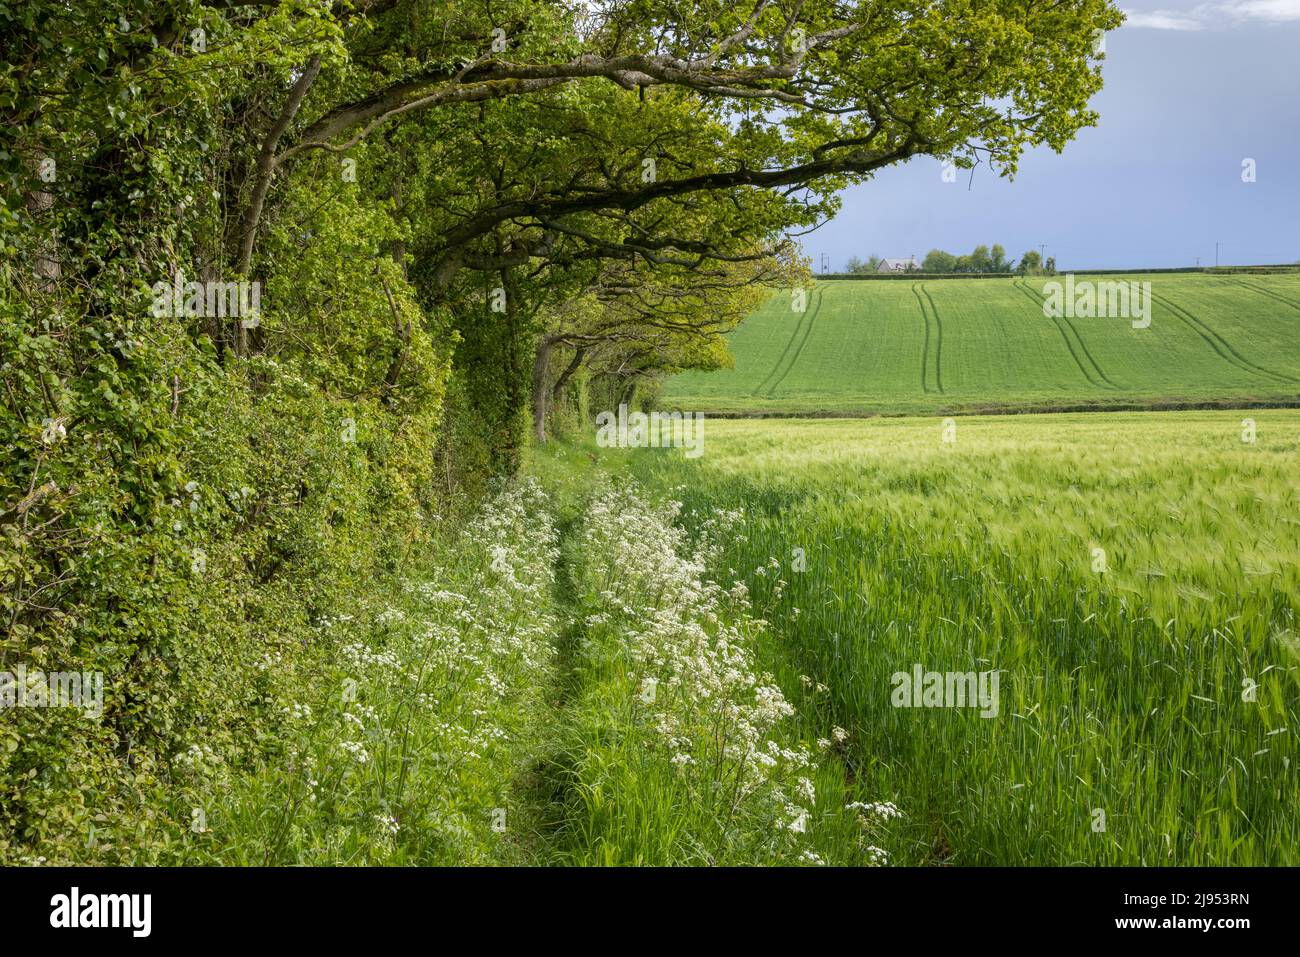 A barley field Purse Caundle, Dorset, England, UK Stock Photo